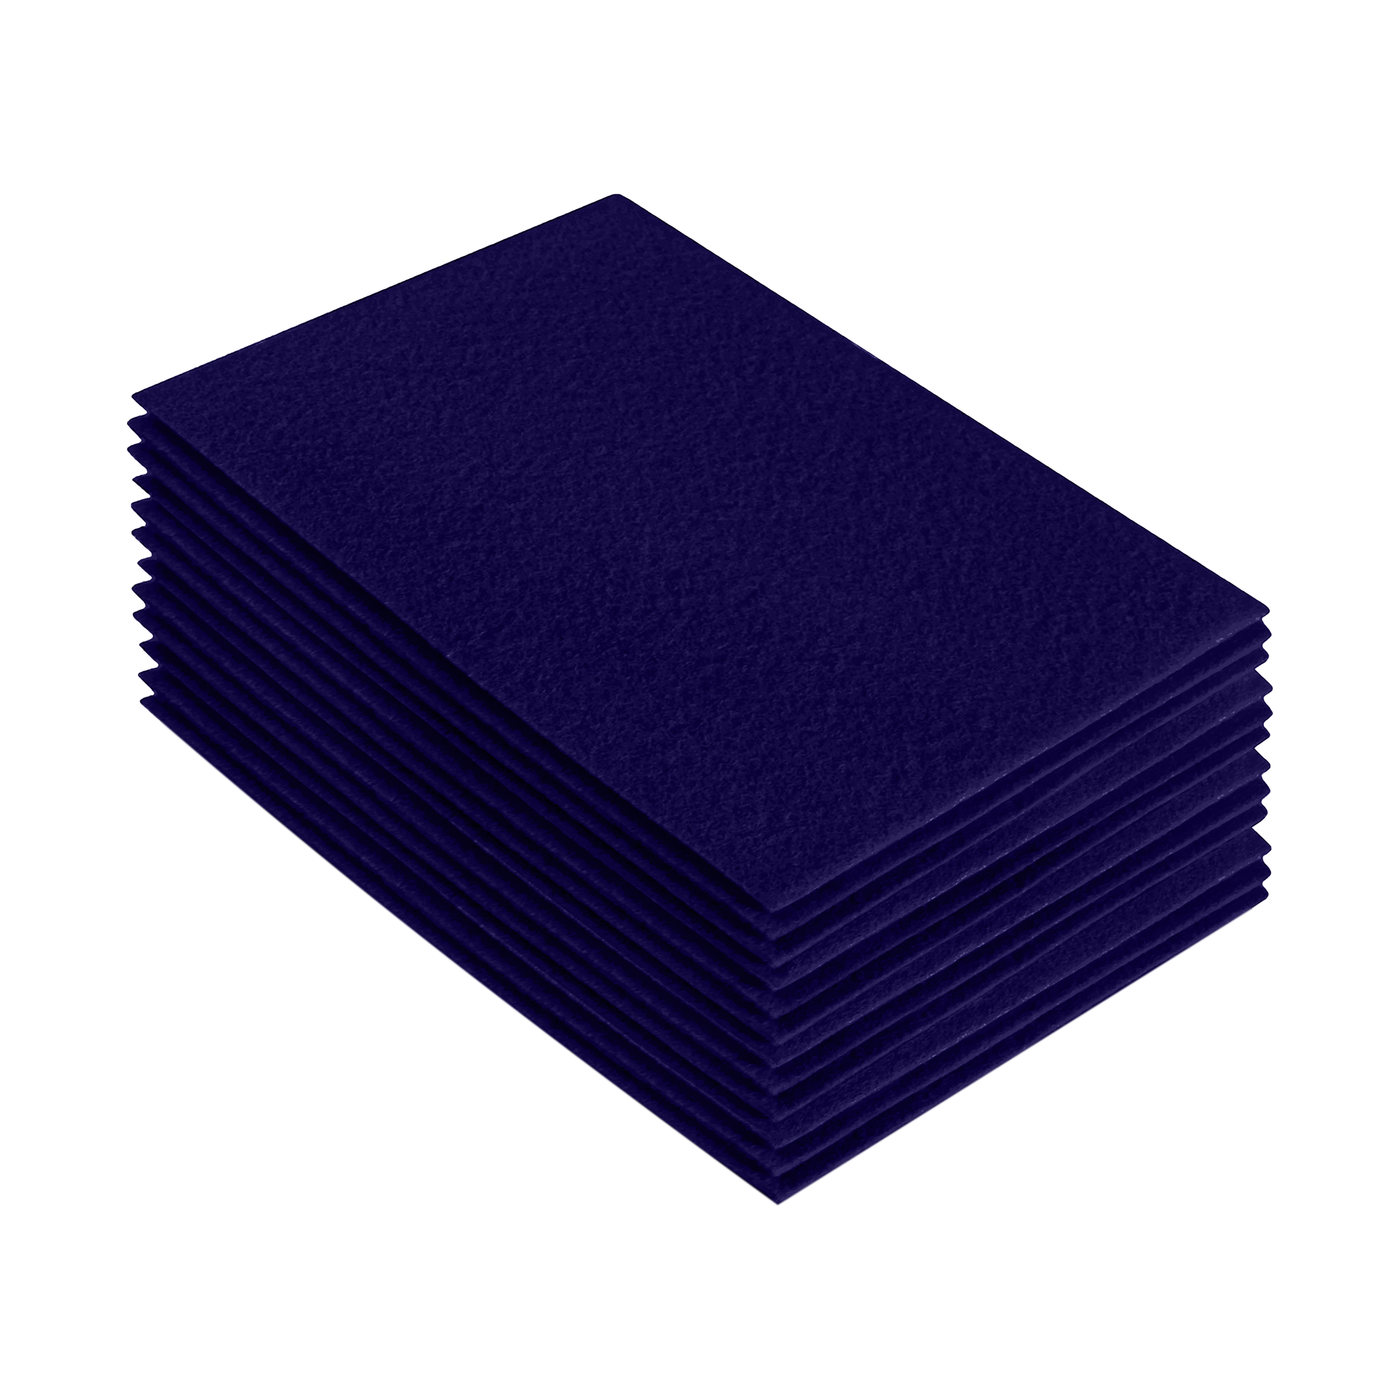 Acrylic Felt 9"X12" Sheet Packs | Navy Blue - FabricLA.com